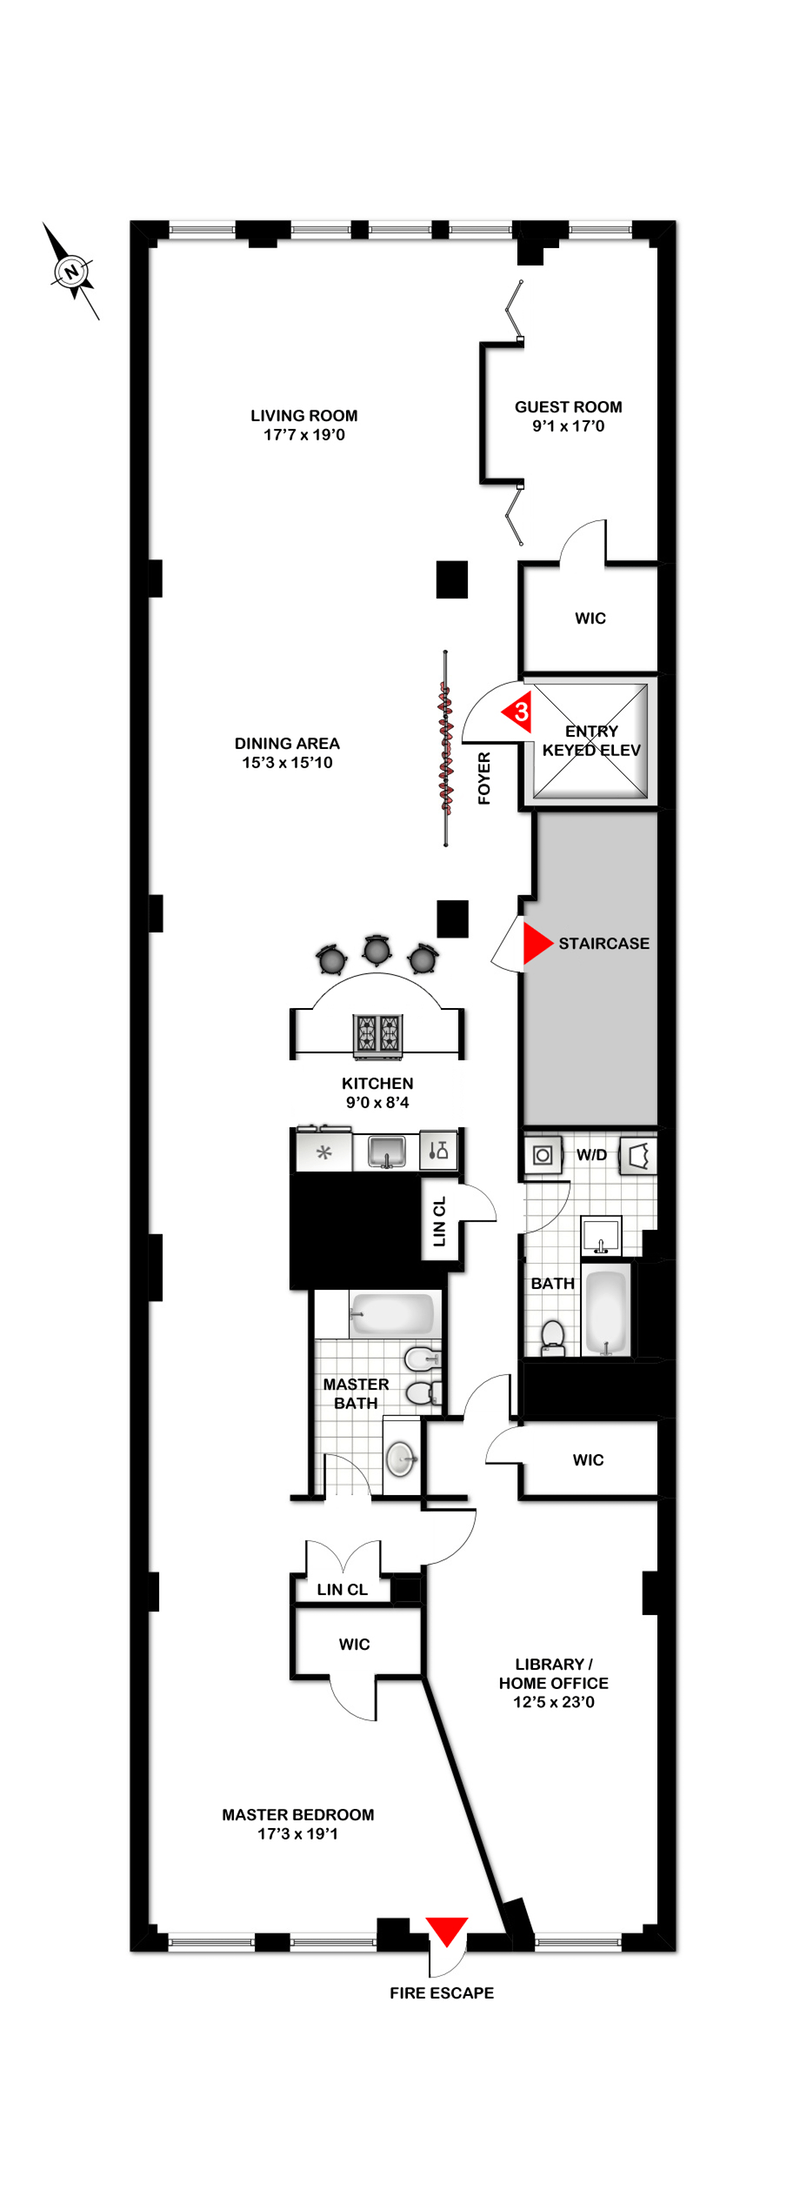 Floorplan for 58 West 15th Street